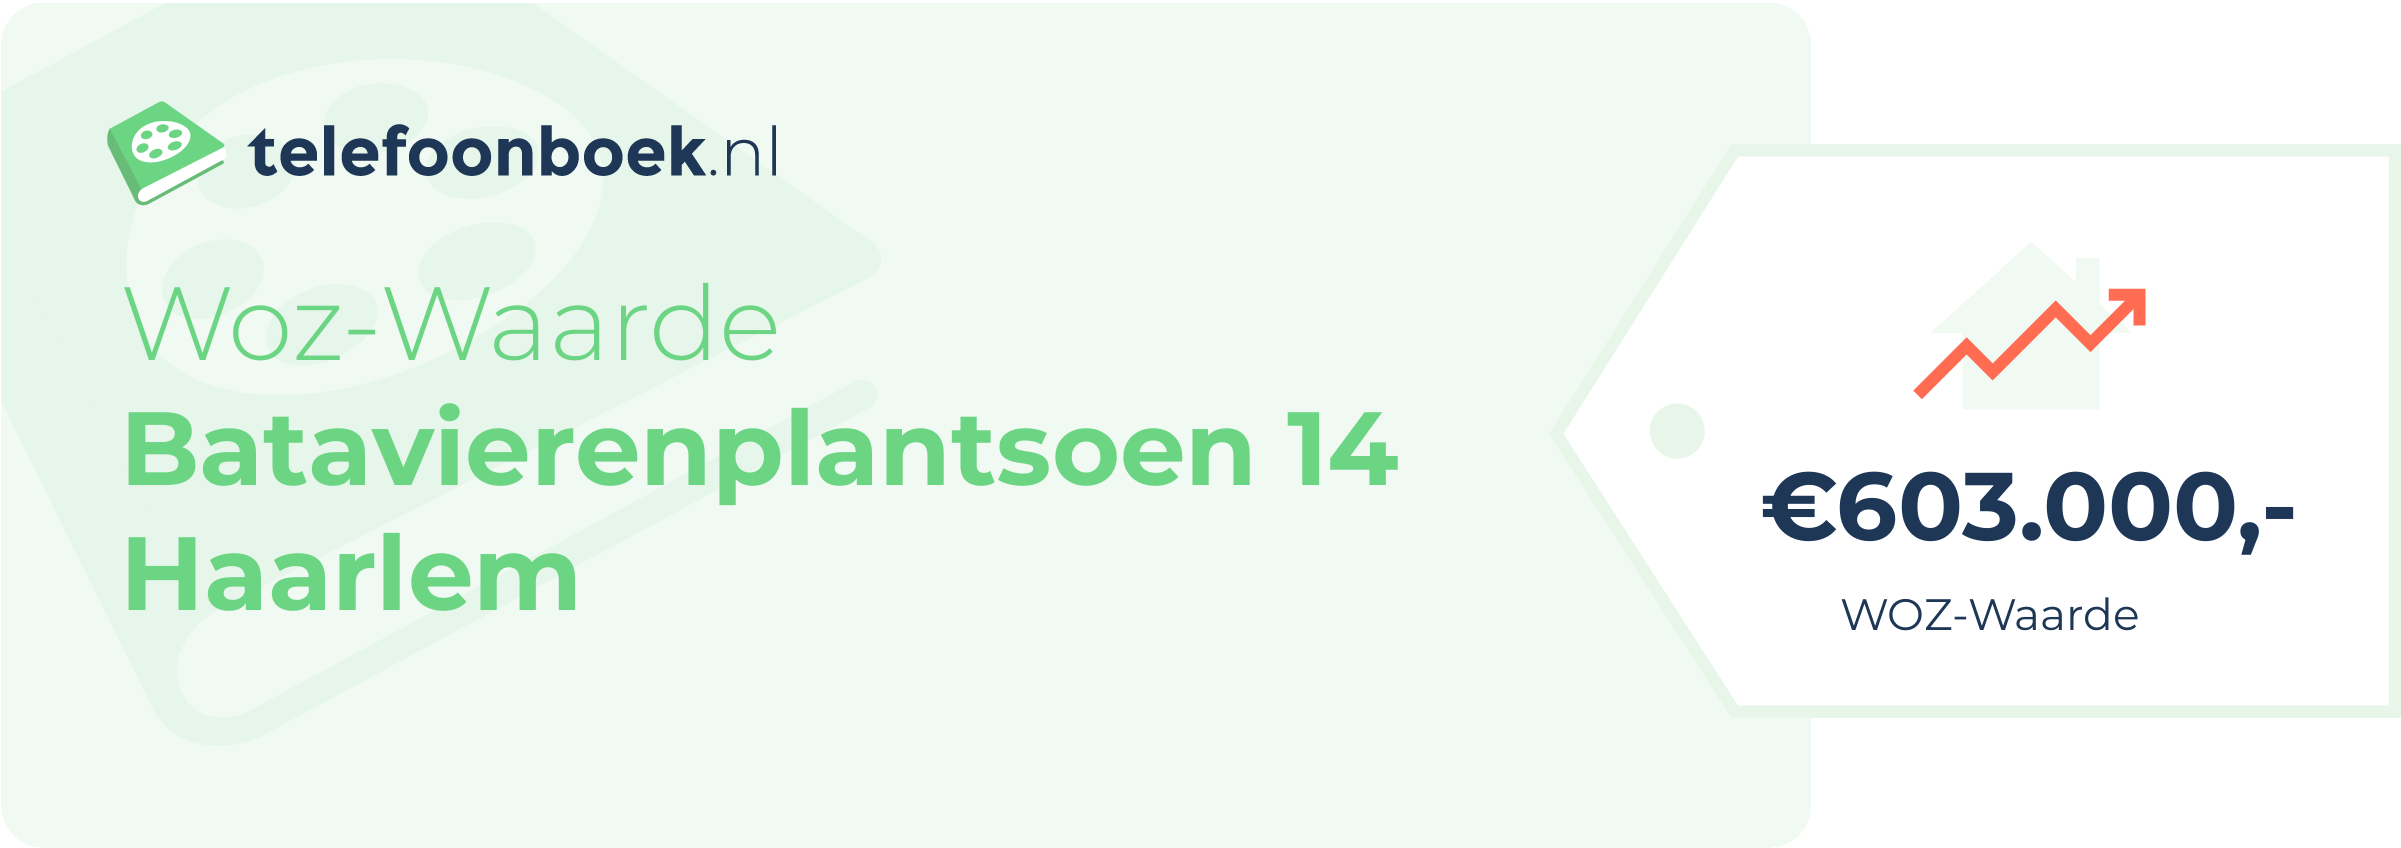 WOZ-waarde Batavierenplantsoen 14 Haarlem